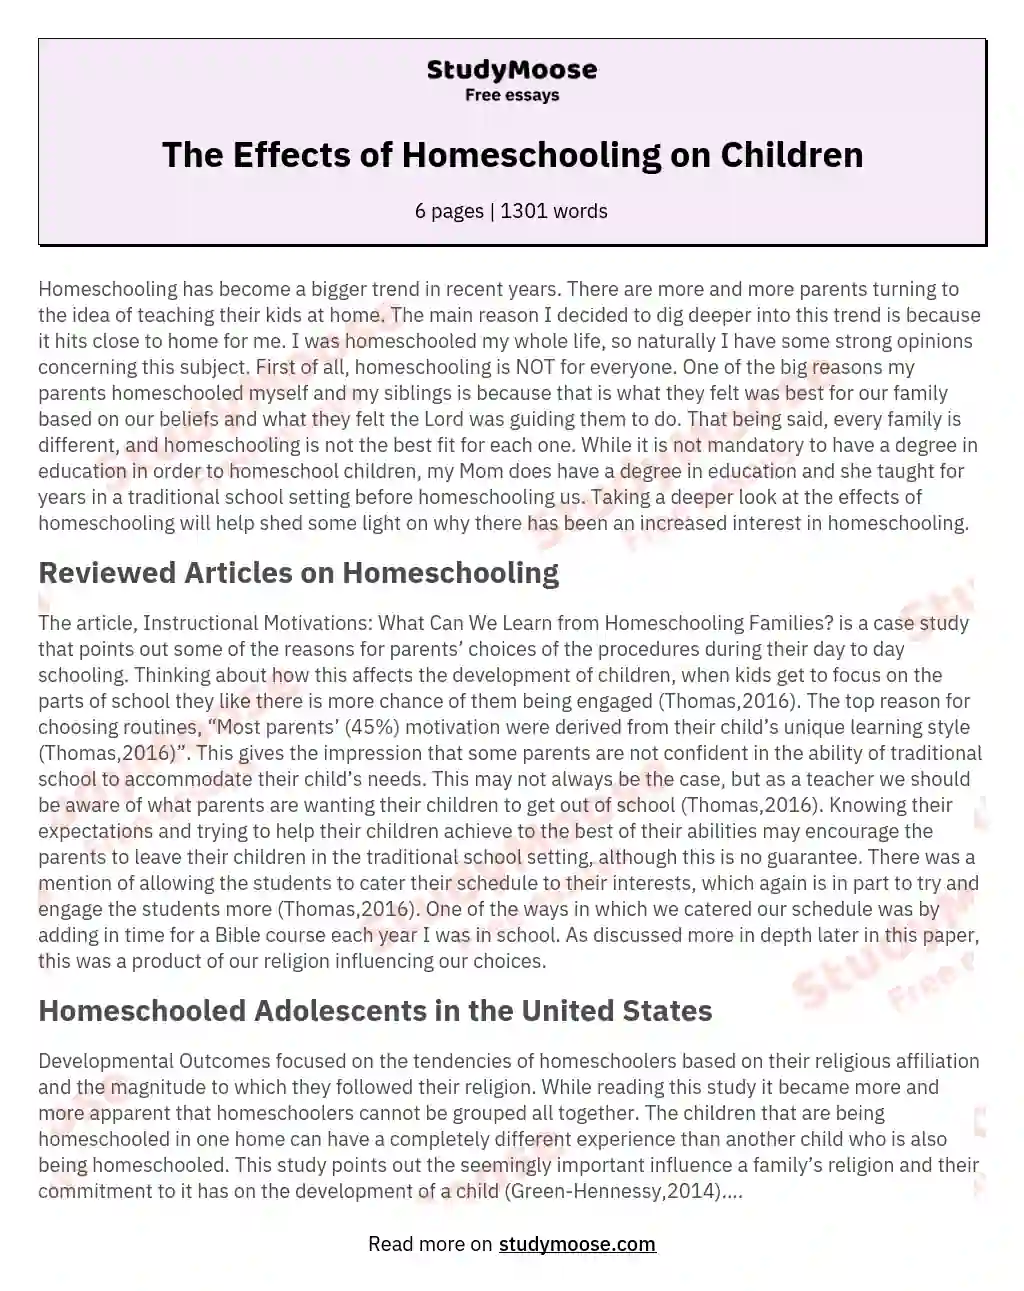 homeschooling essay conclusion